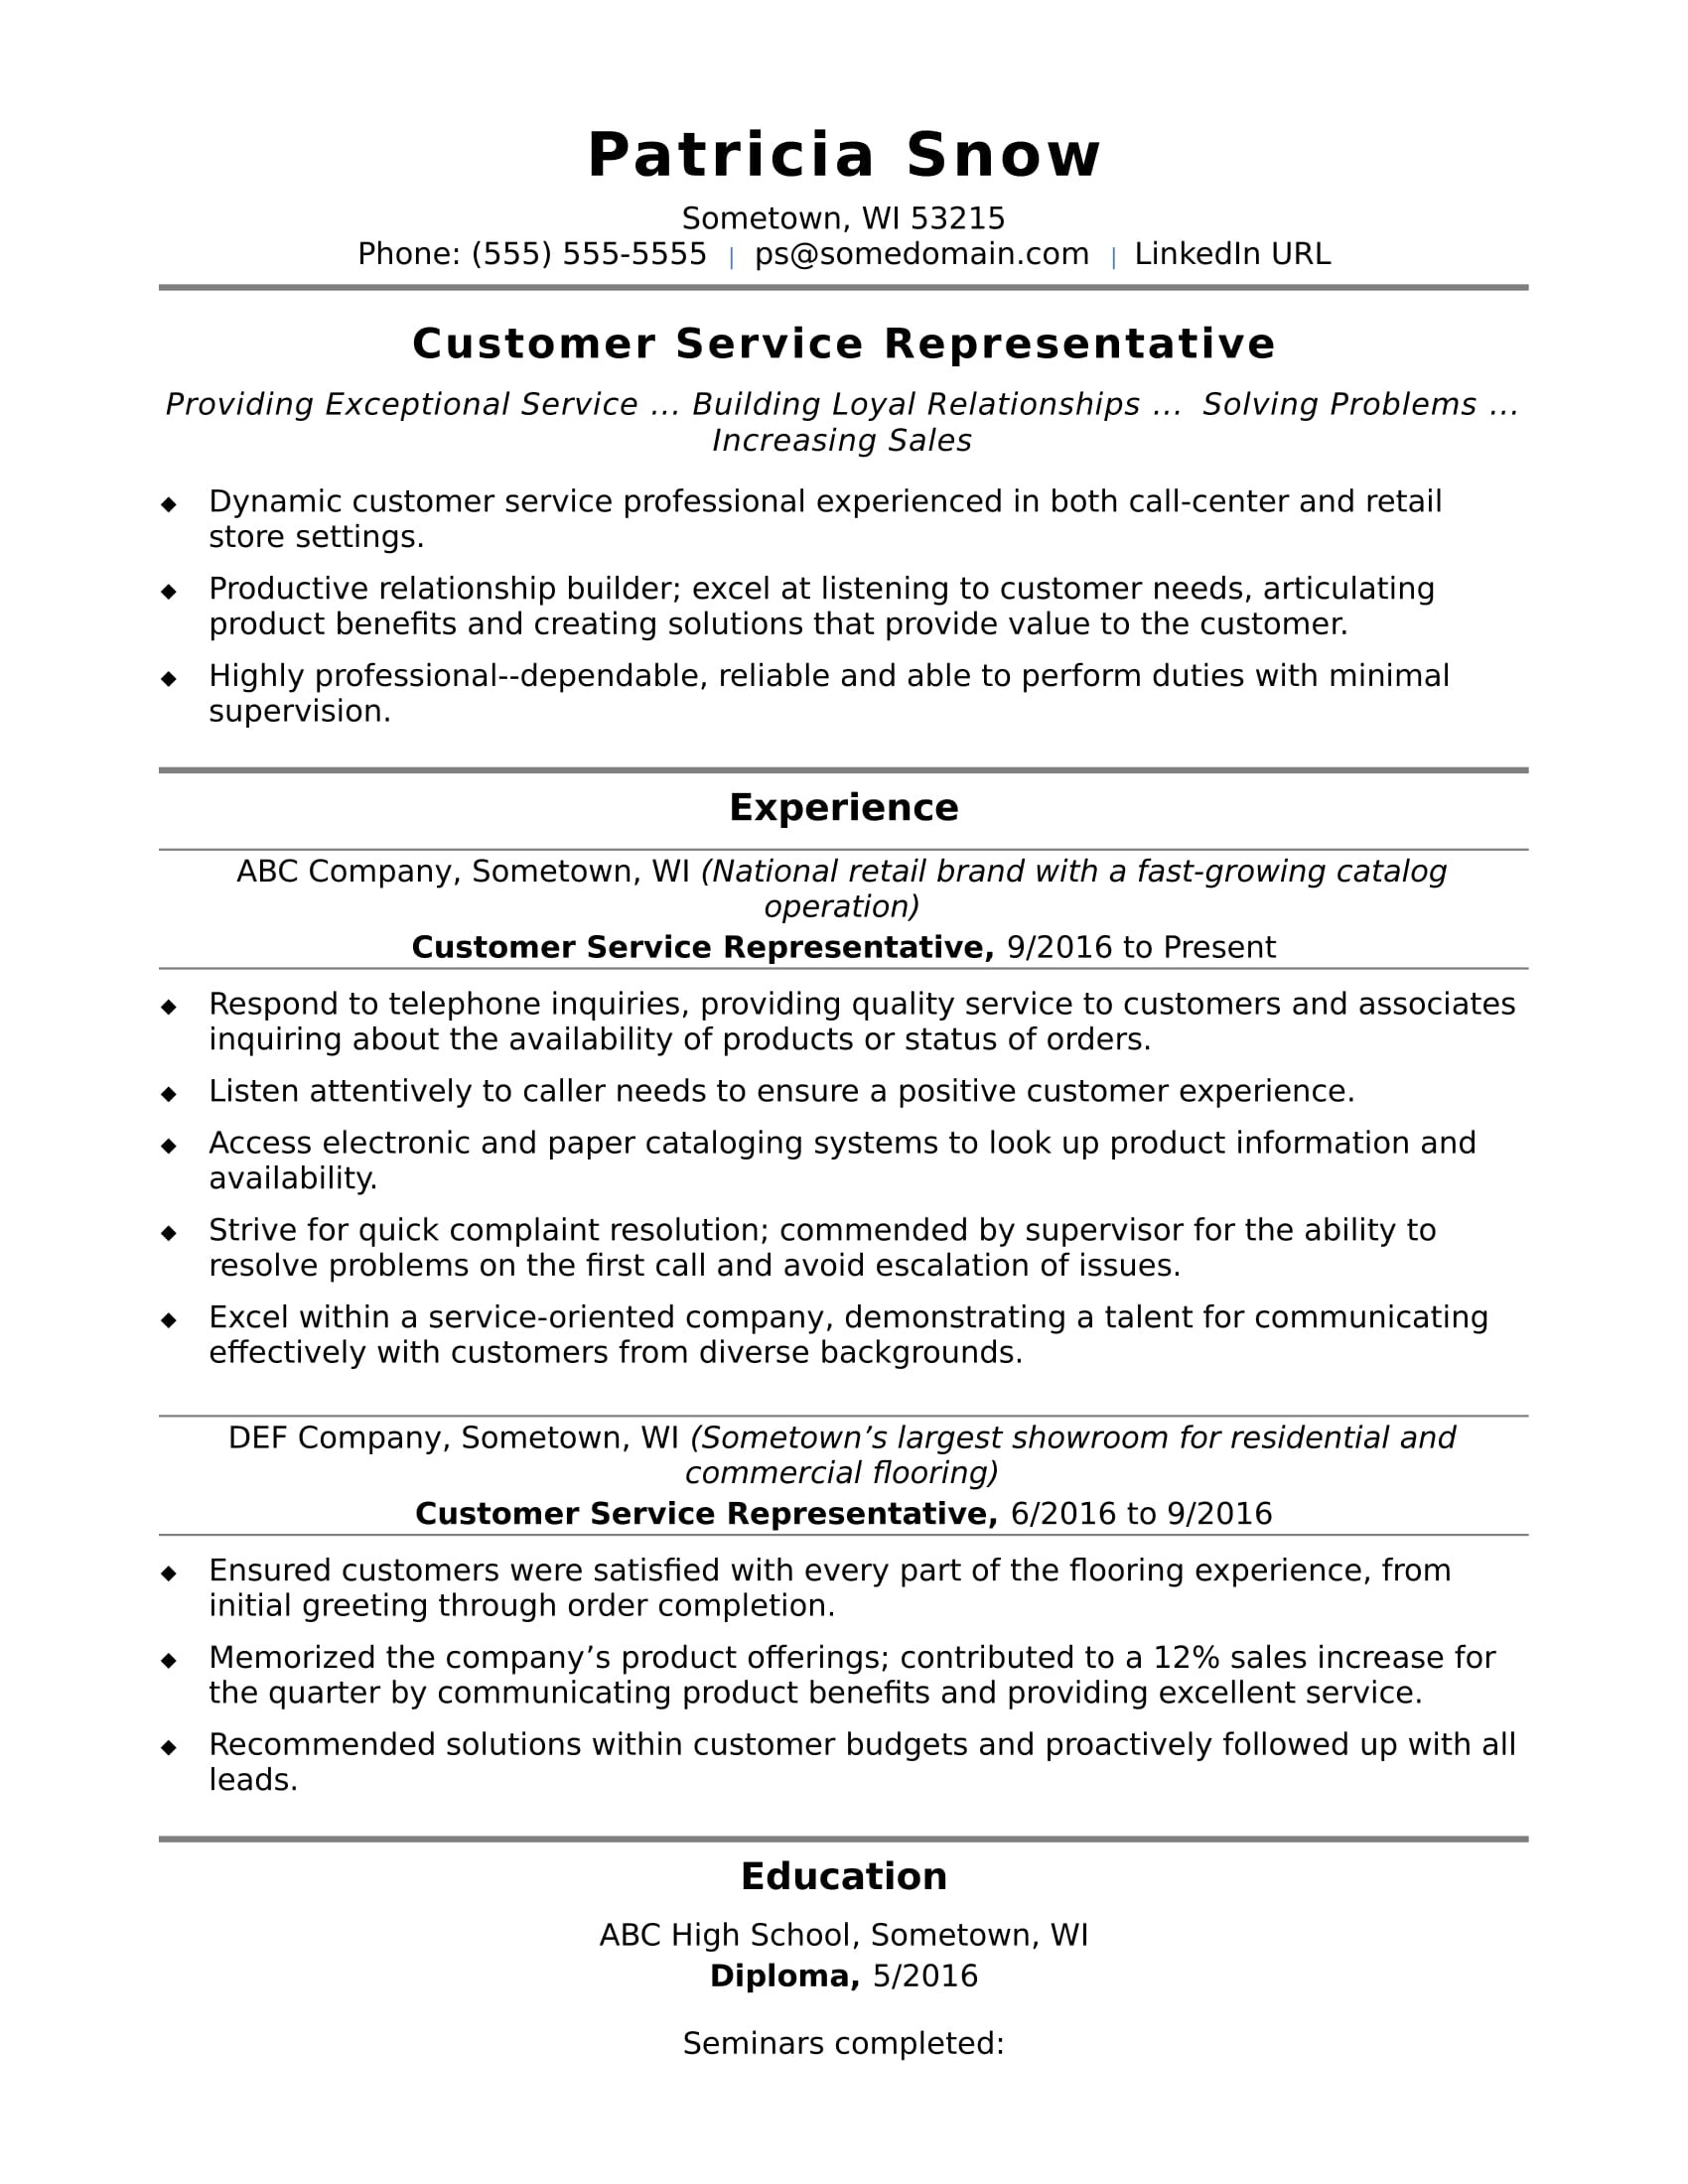 Dealer Customr Service Responsibleity and Resume Sample Entry-level Customer Service Resume Sample Monster.com